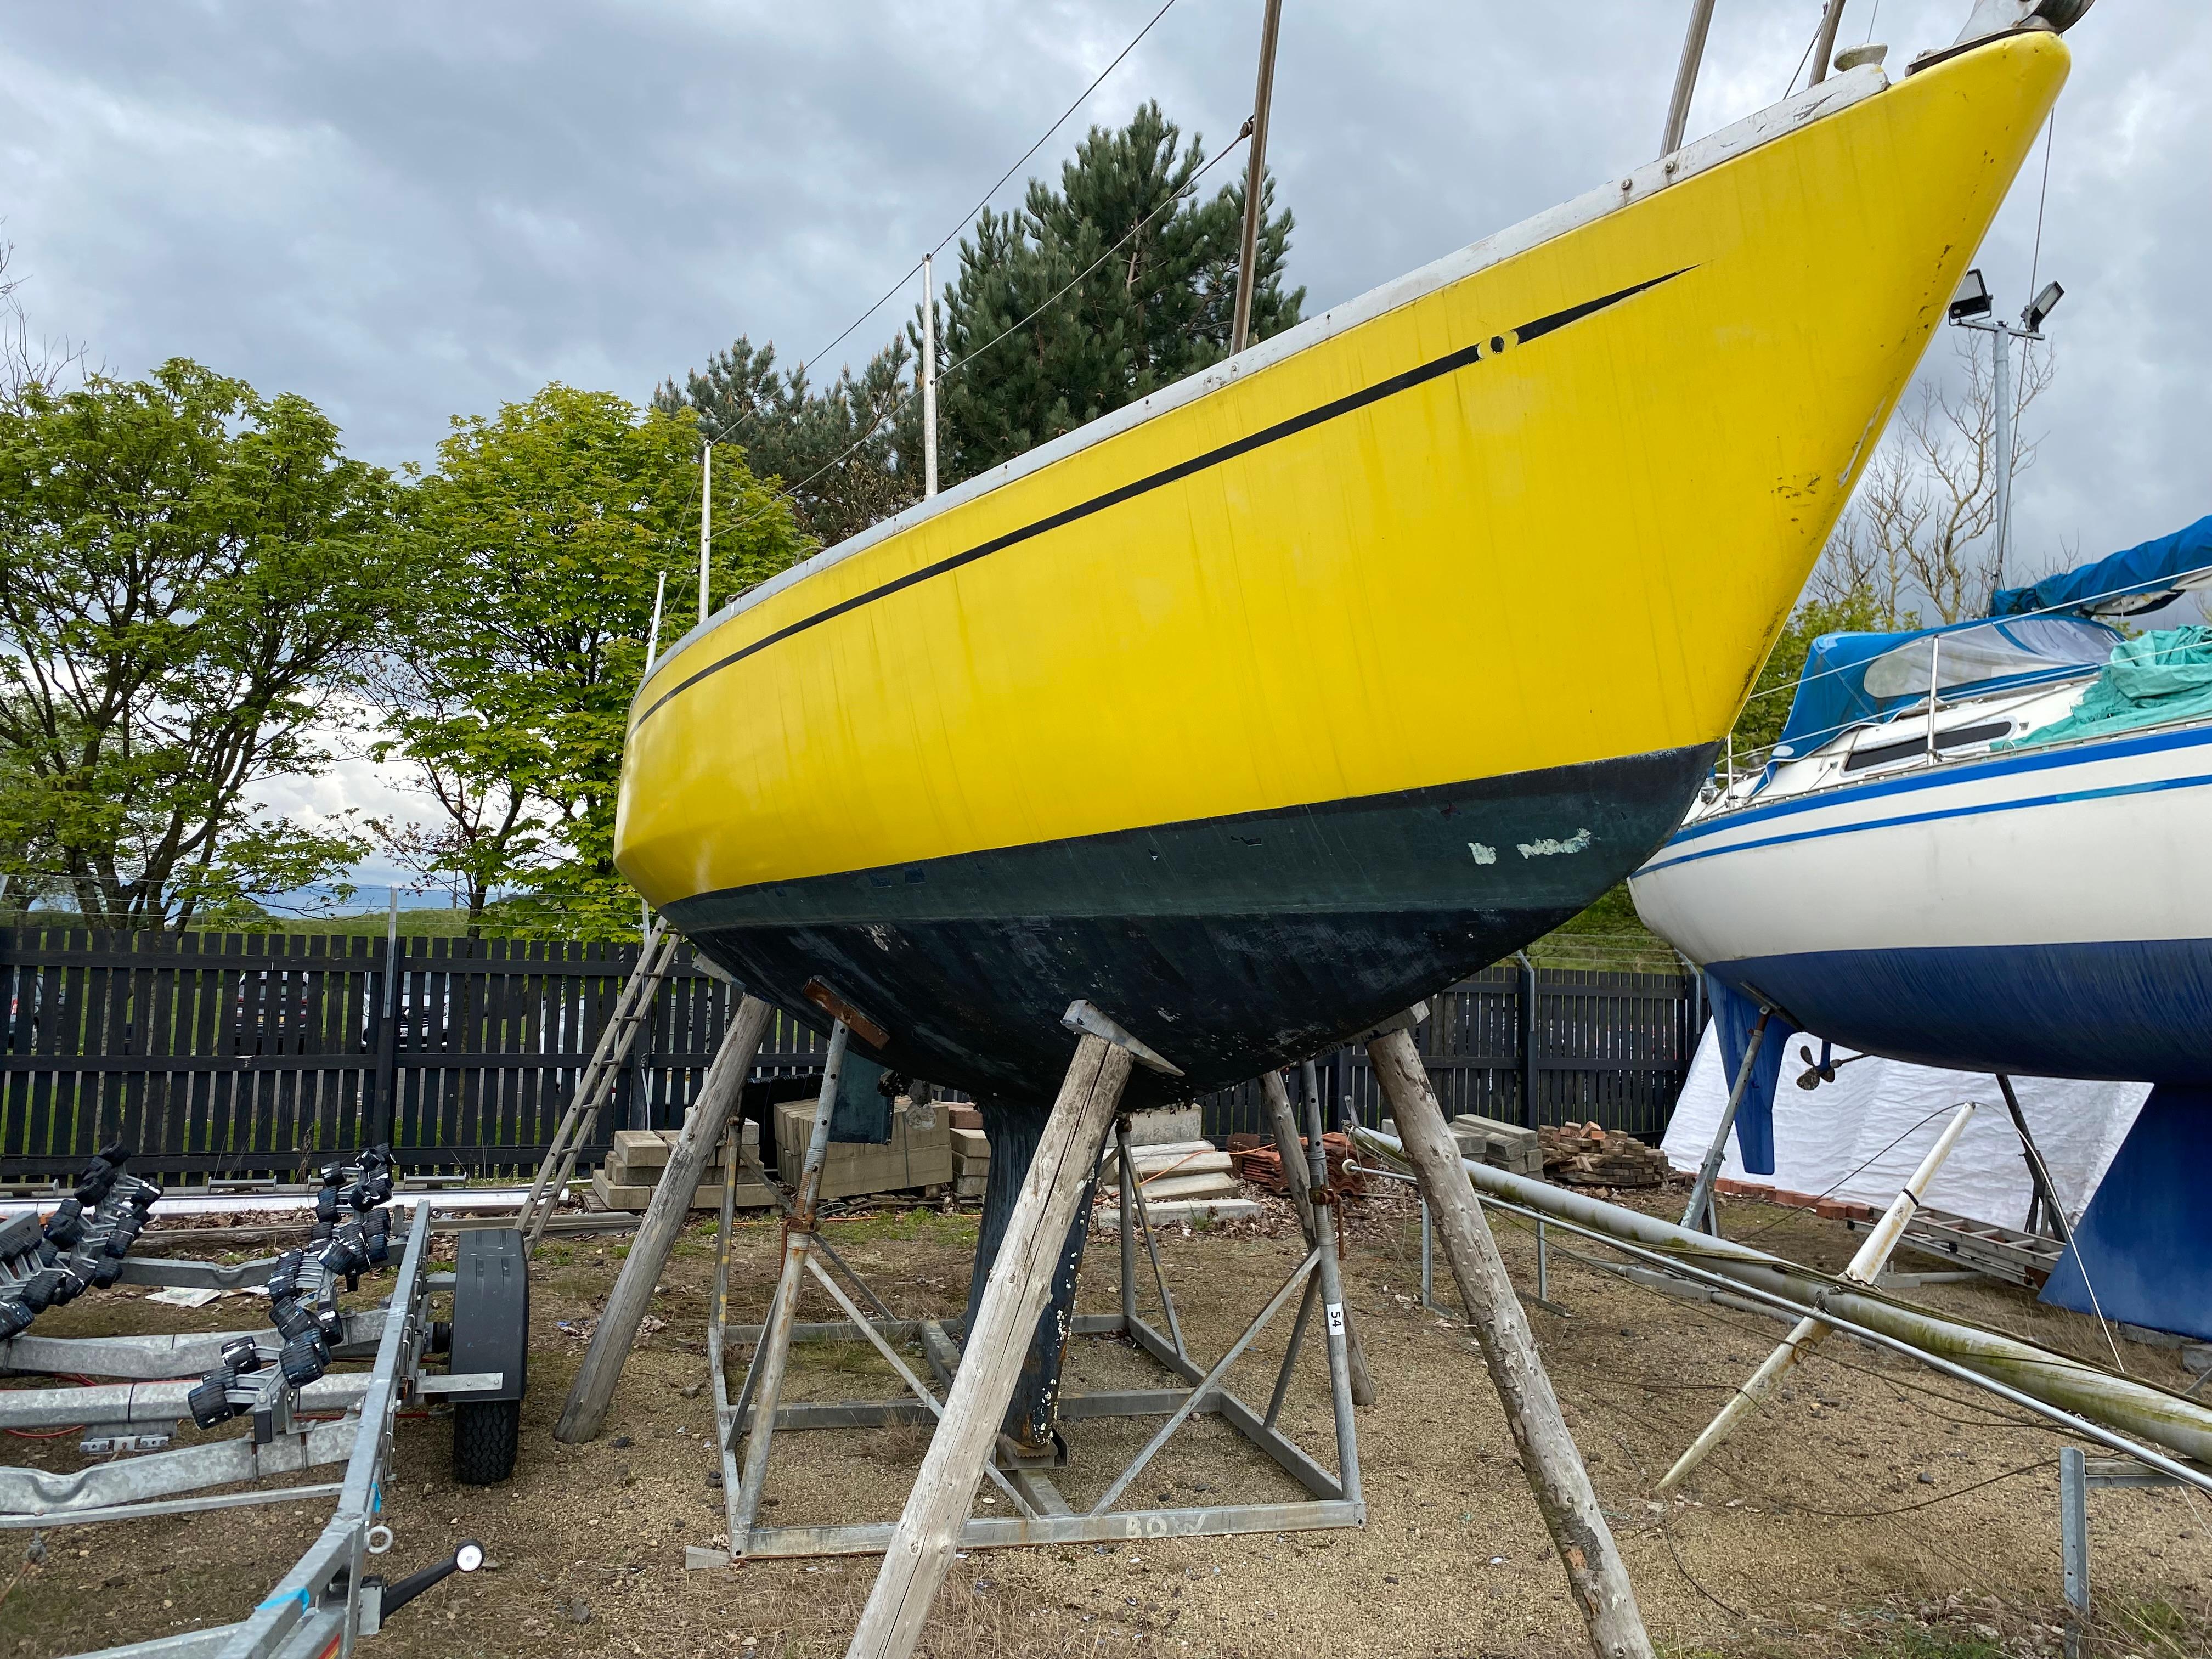 scampi 30 sailboat for sale